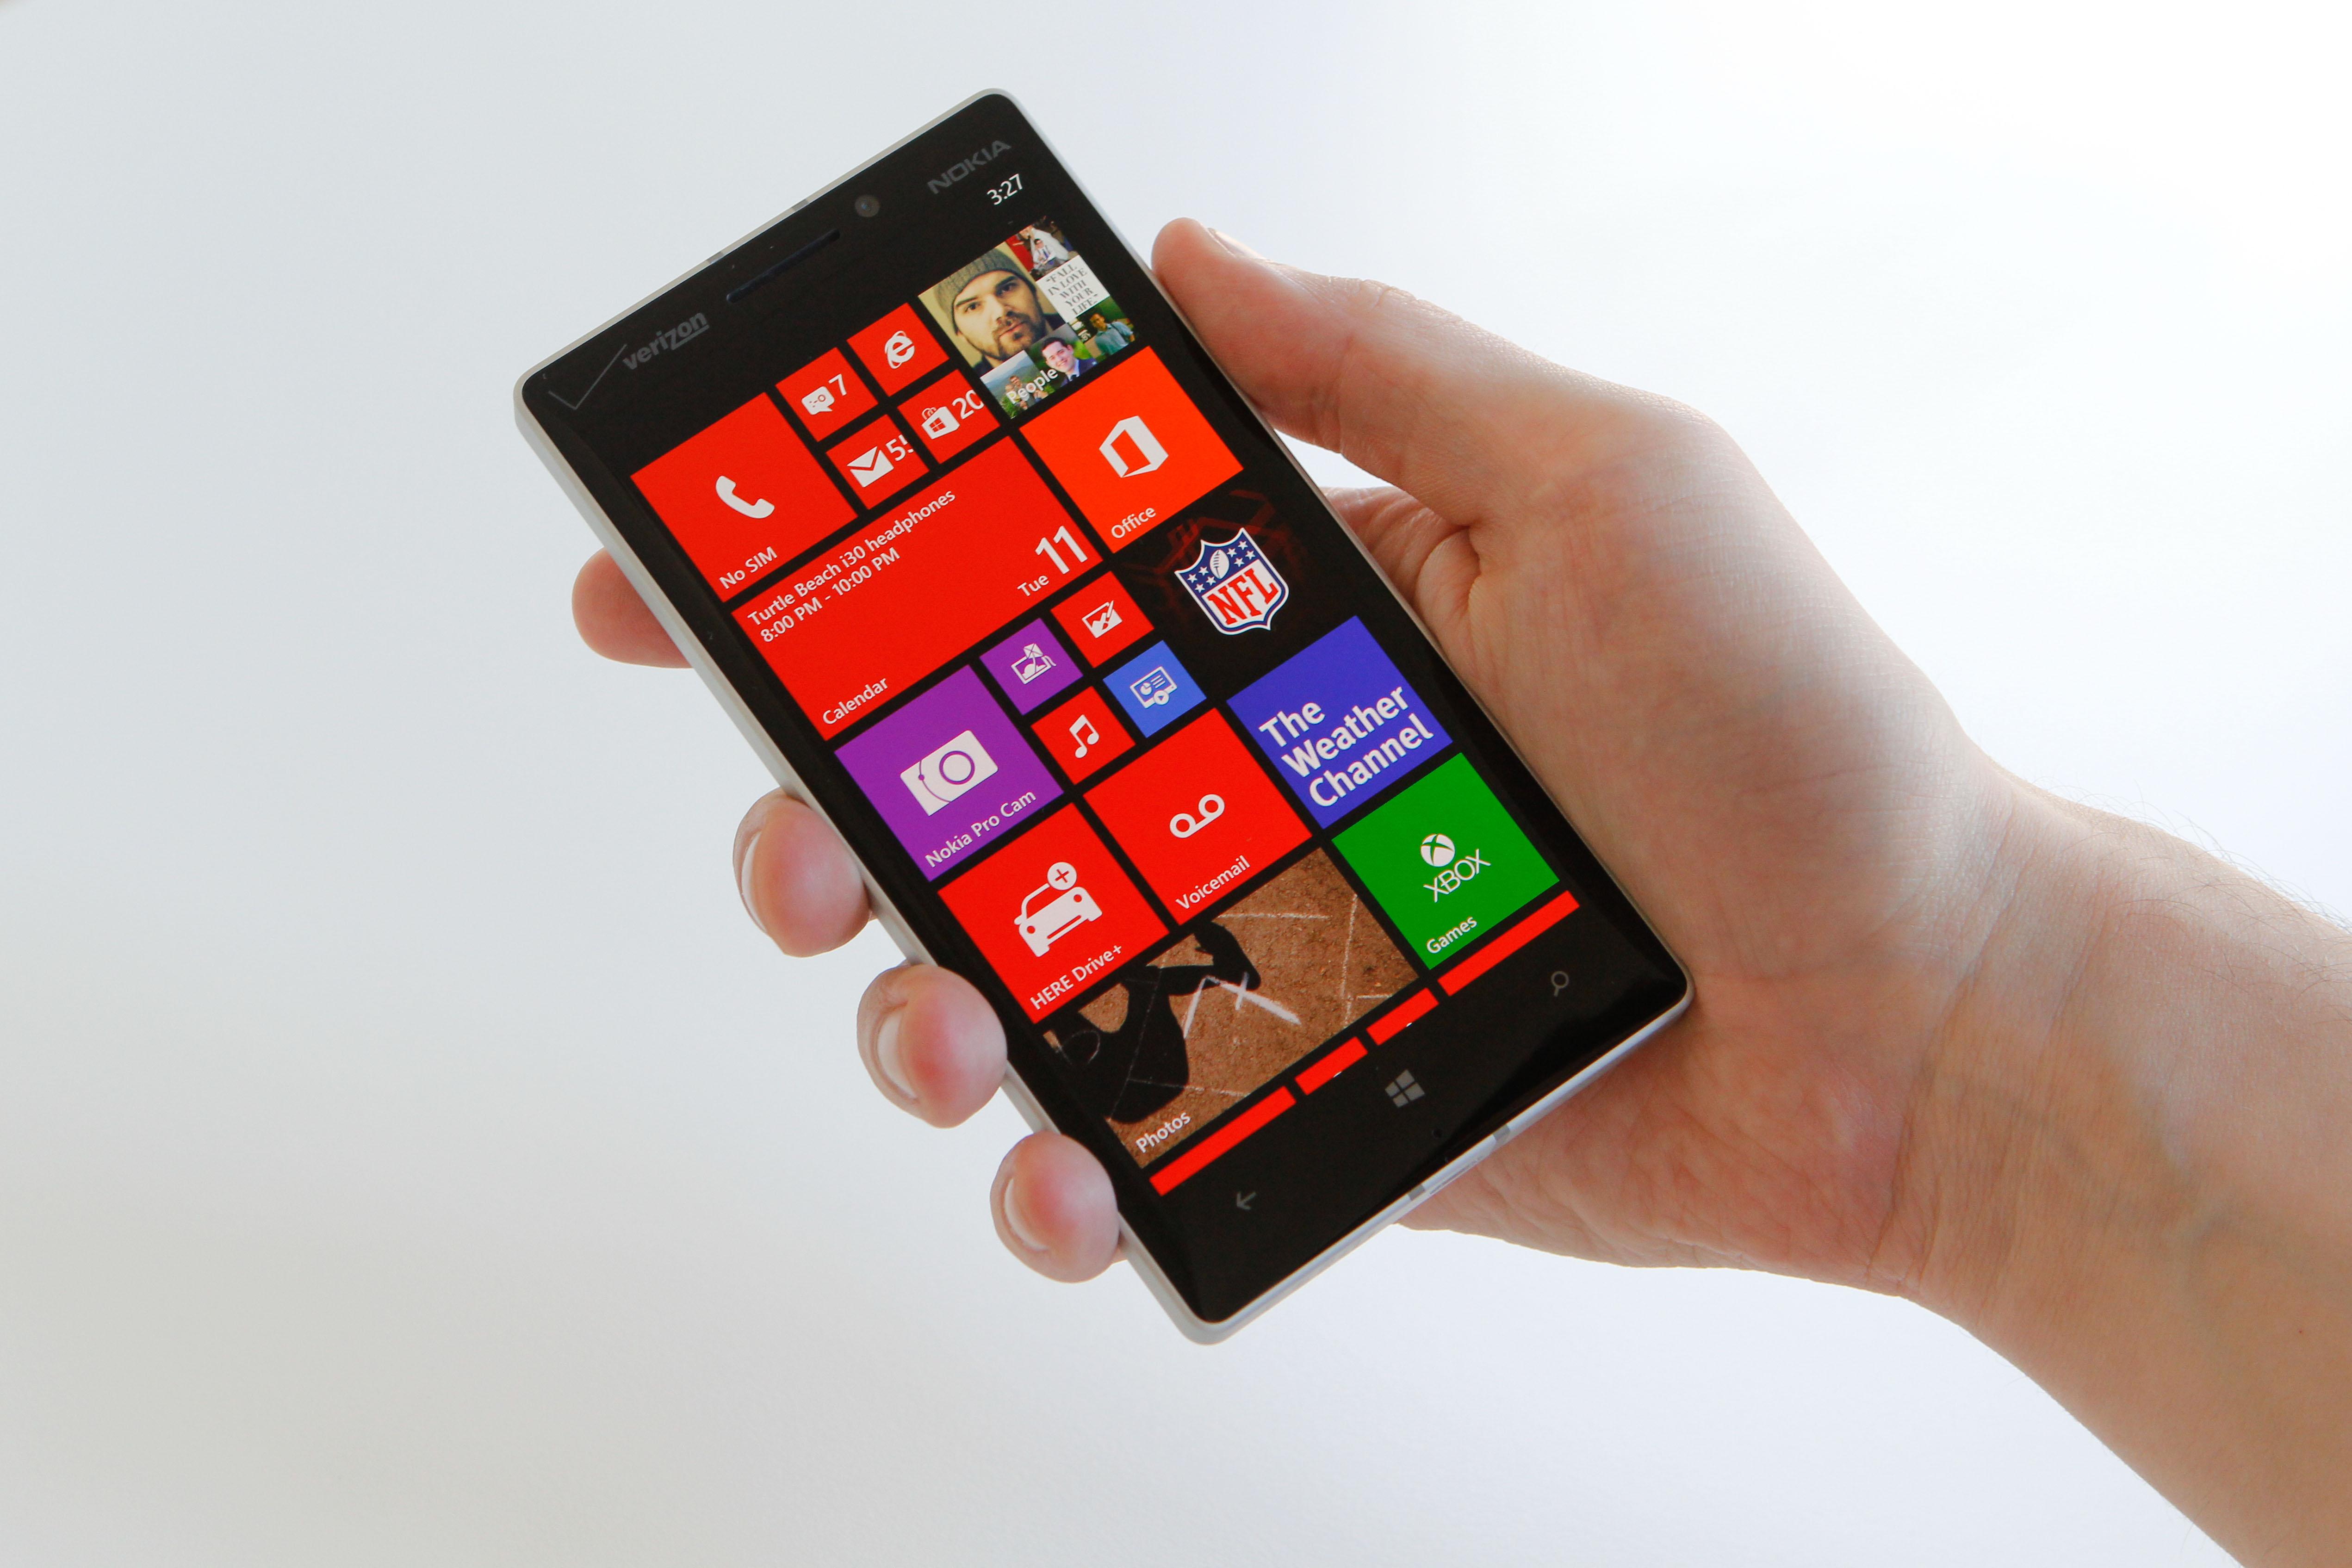 Nokia Lumia Phone Icons